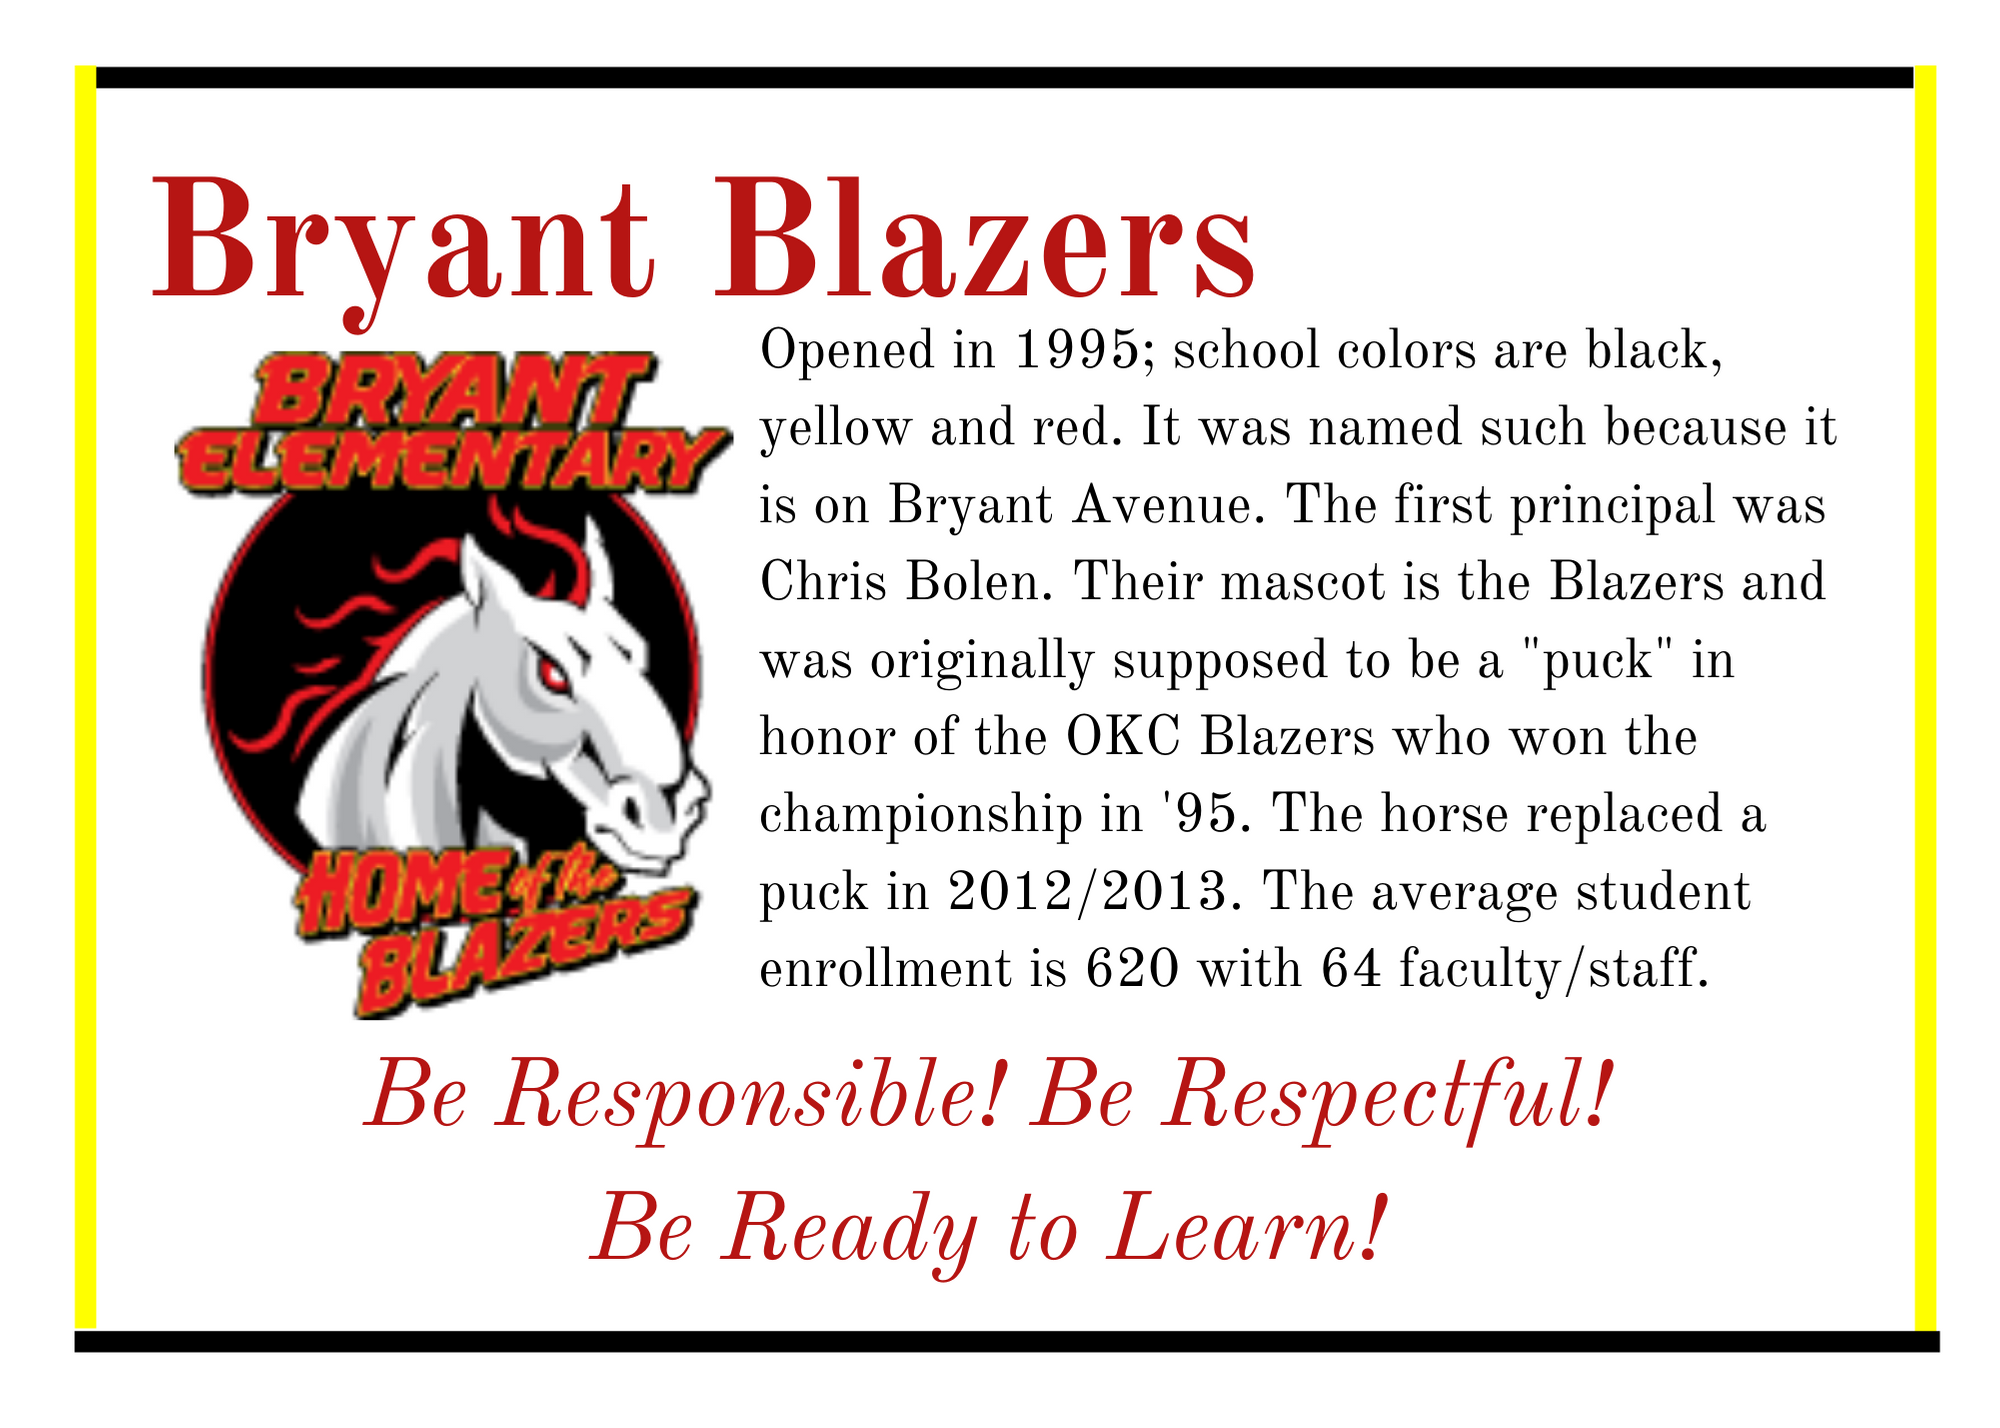 Bryant Blazers (1).png